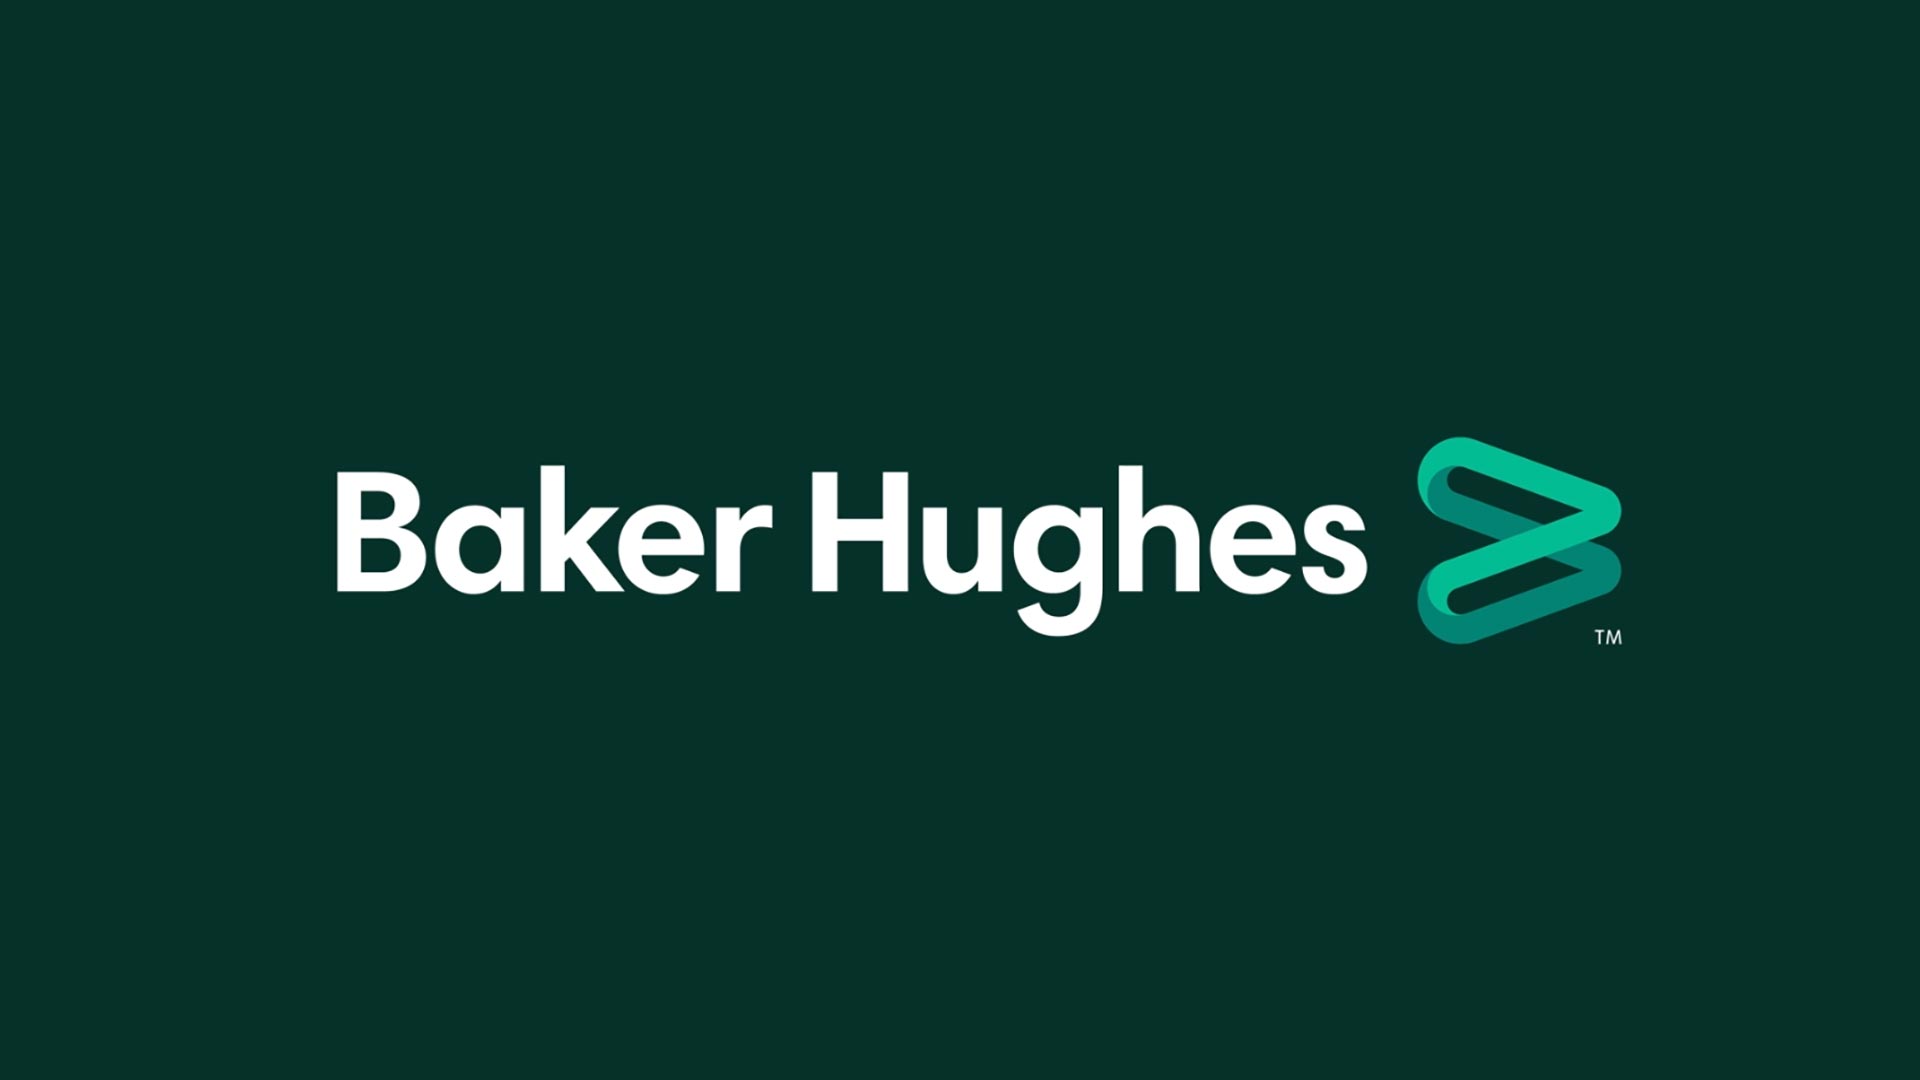 Baker Hughes Graduate Internships: Launch Your Career in Energy